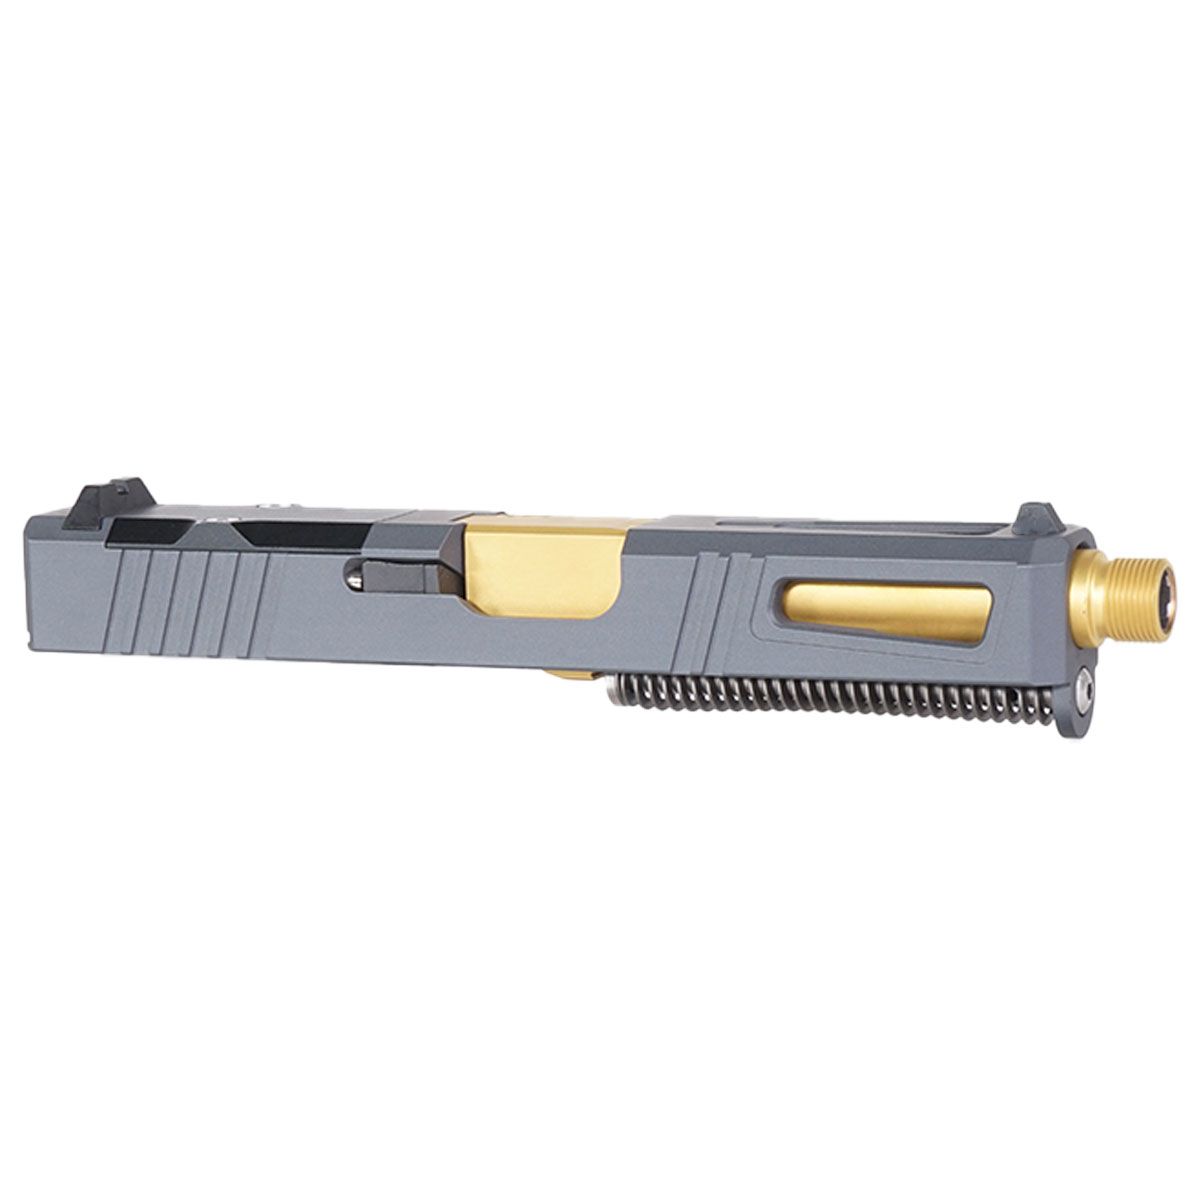 DTT 'Gold Strike-Suppressor Ready' 9mm Complete Slide Kit - Glock 19 Gen 1-3 Compatible